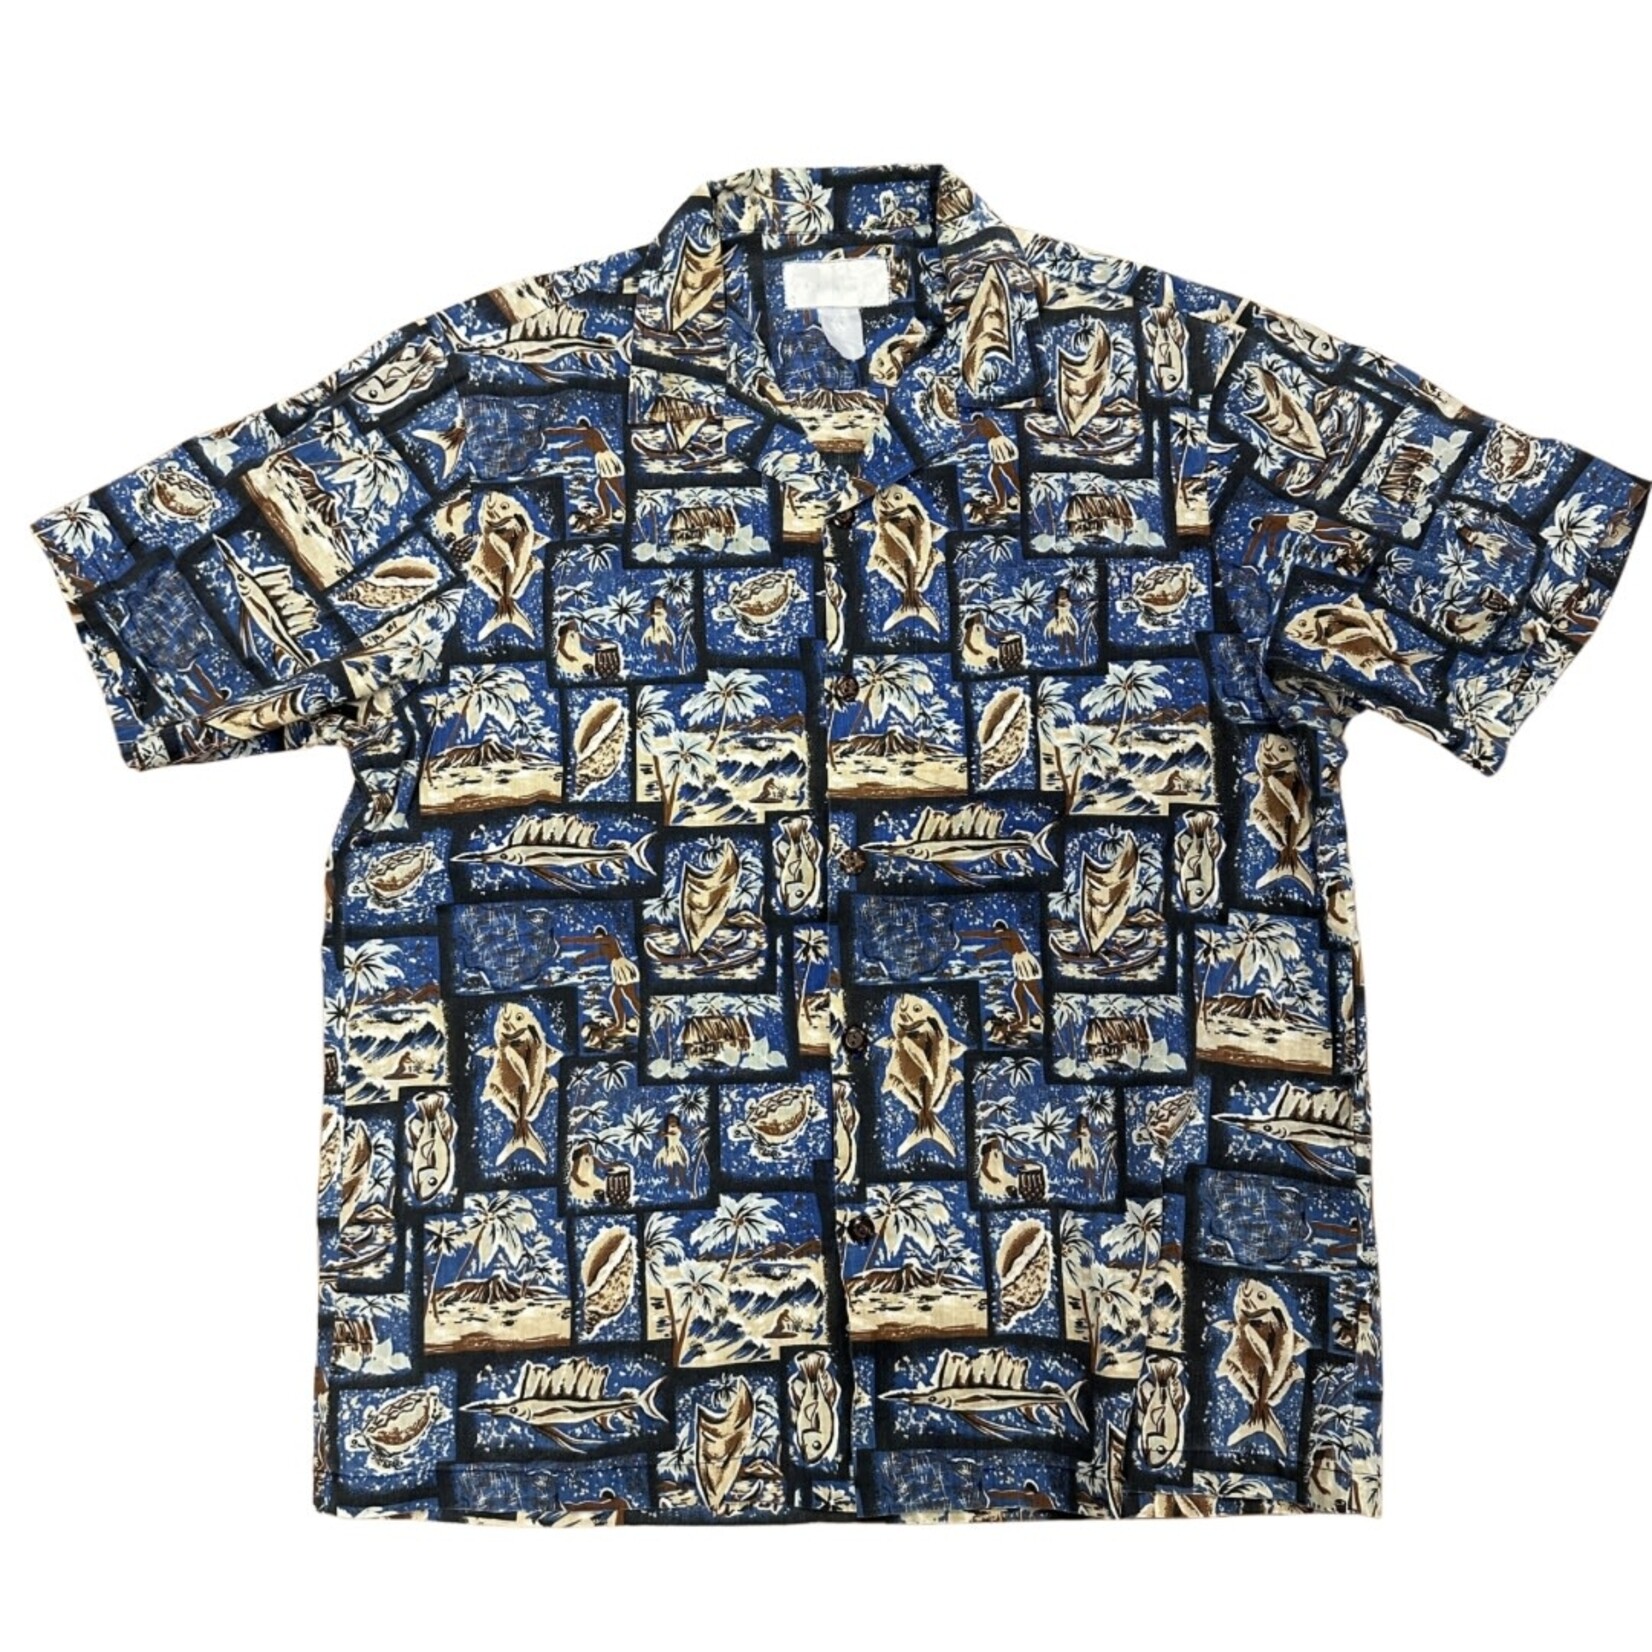 Mission Zero Men’s Vintage Aloha Shirt- L - Unknown - Marlin Ulua Hula Canoe Blue & Brown